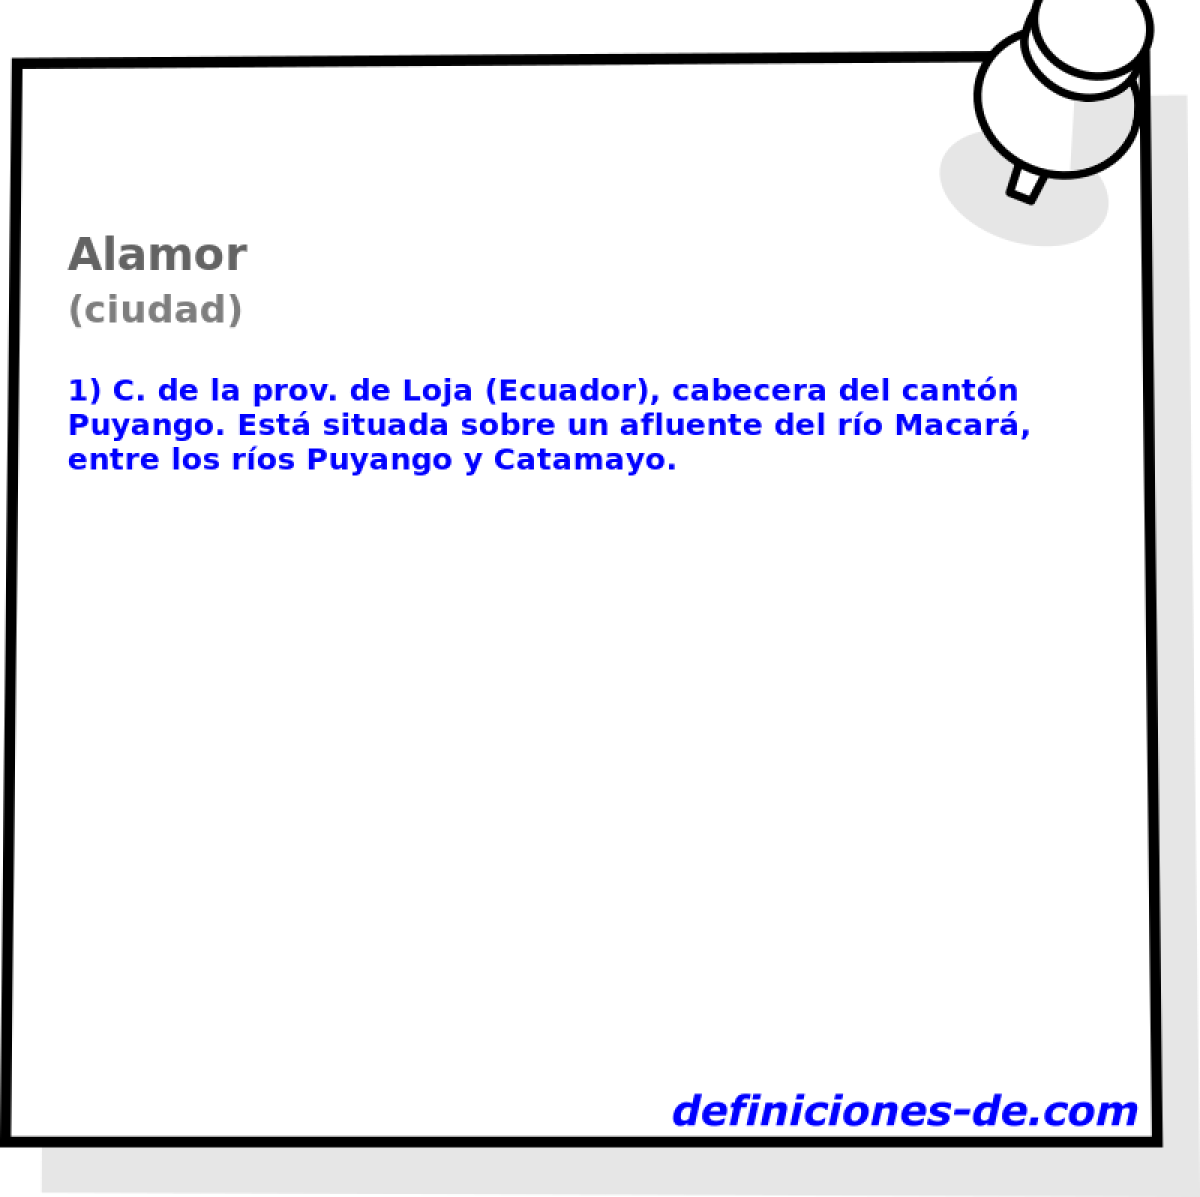 Alamor (ciudad)